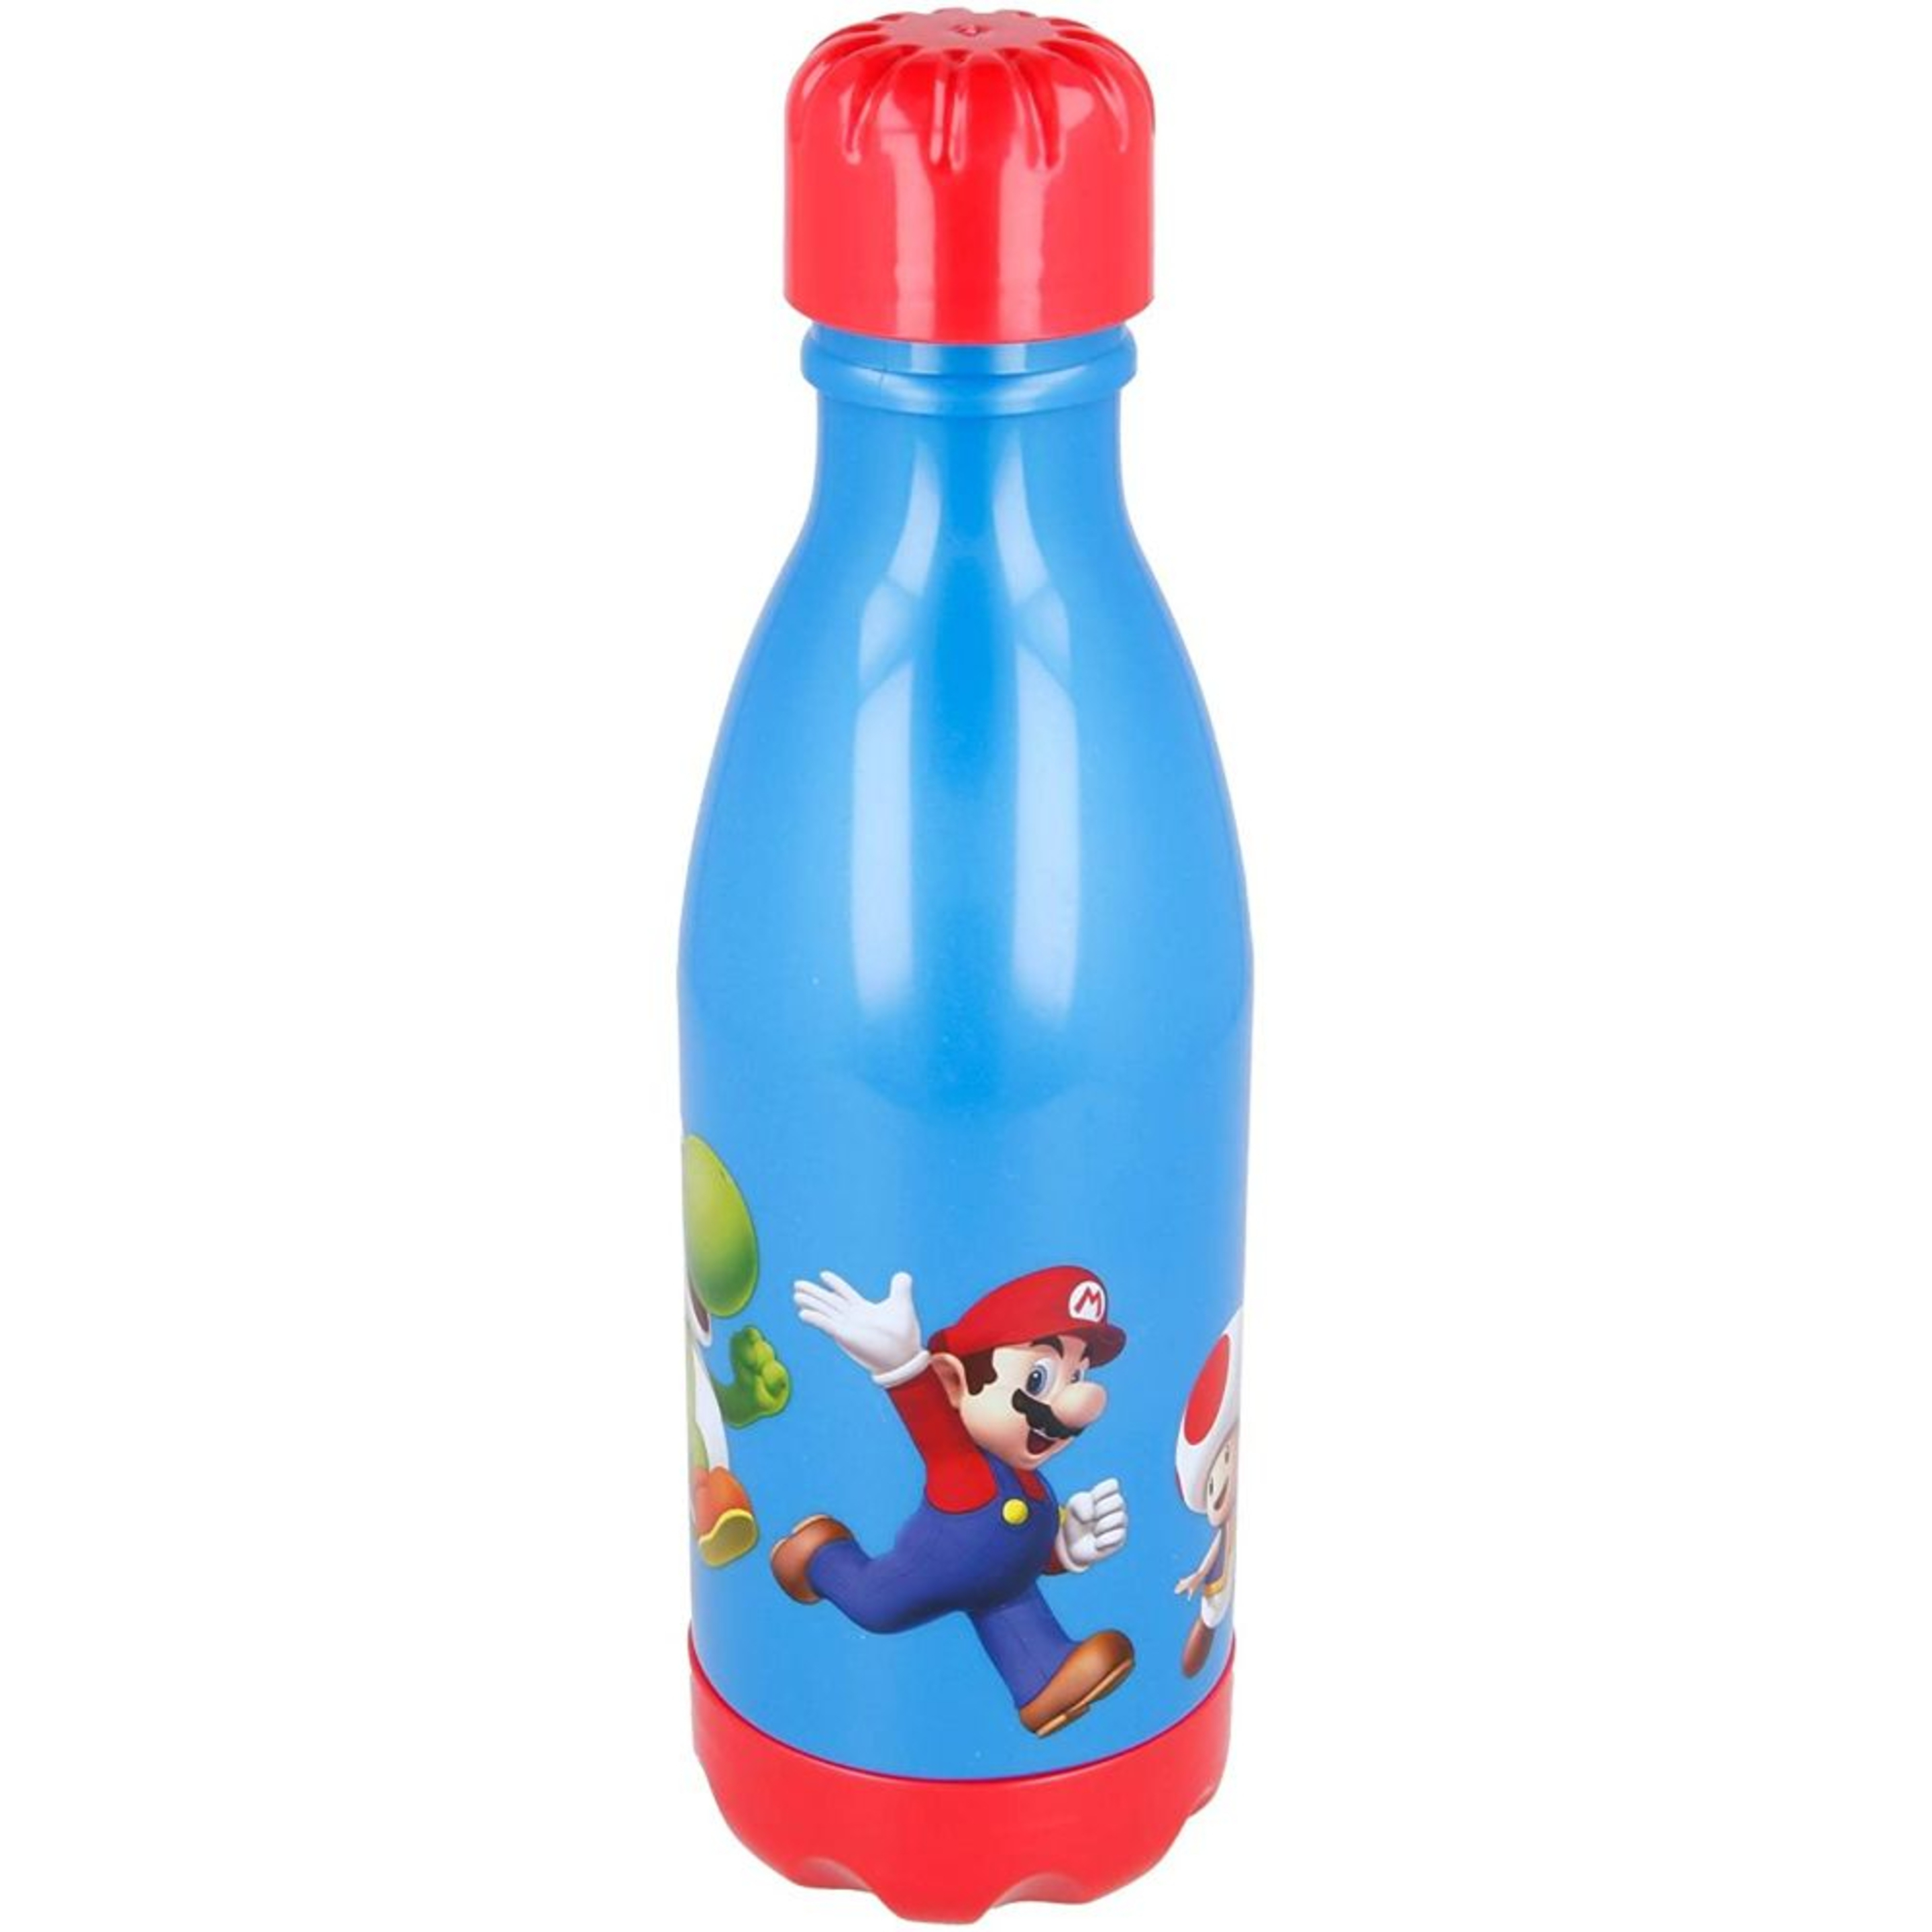 Botella Super Mario Bros 70757 - azul - 